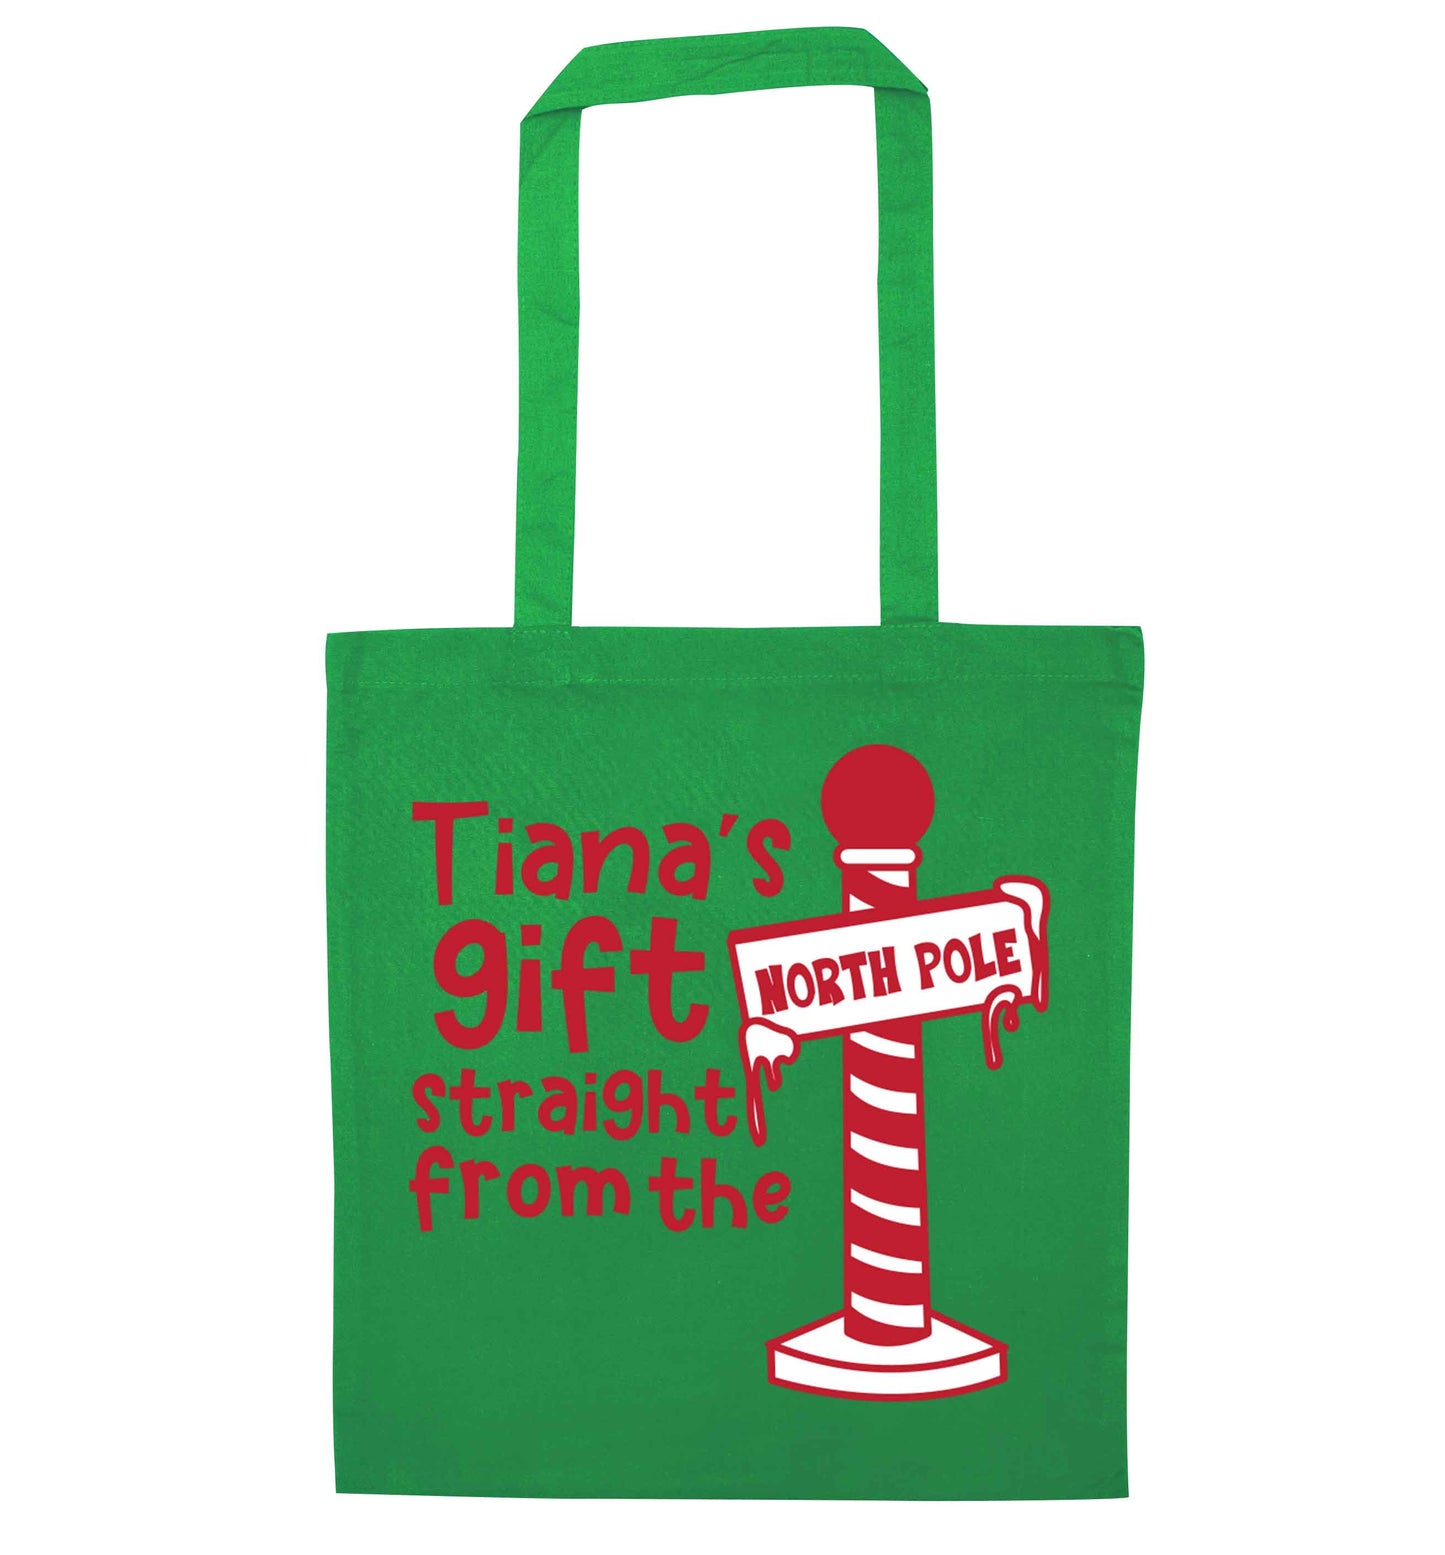 Merry Christmas green tote bag